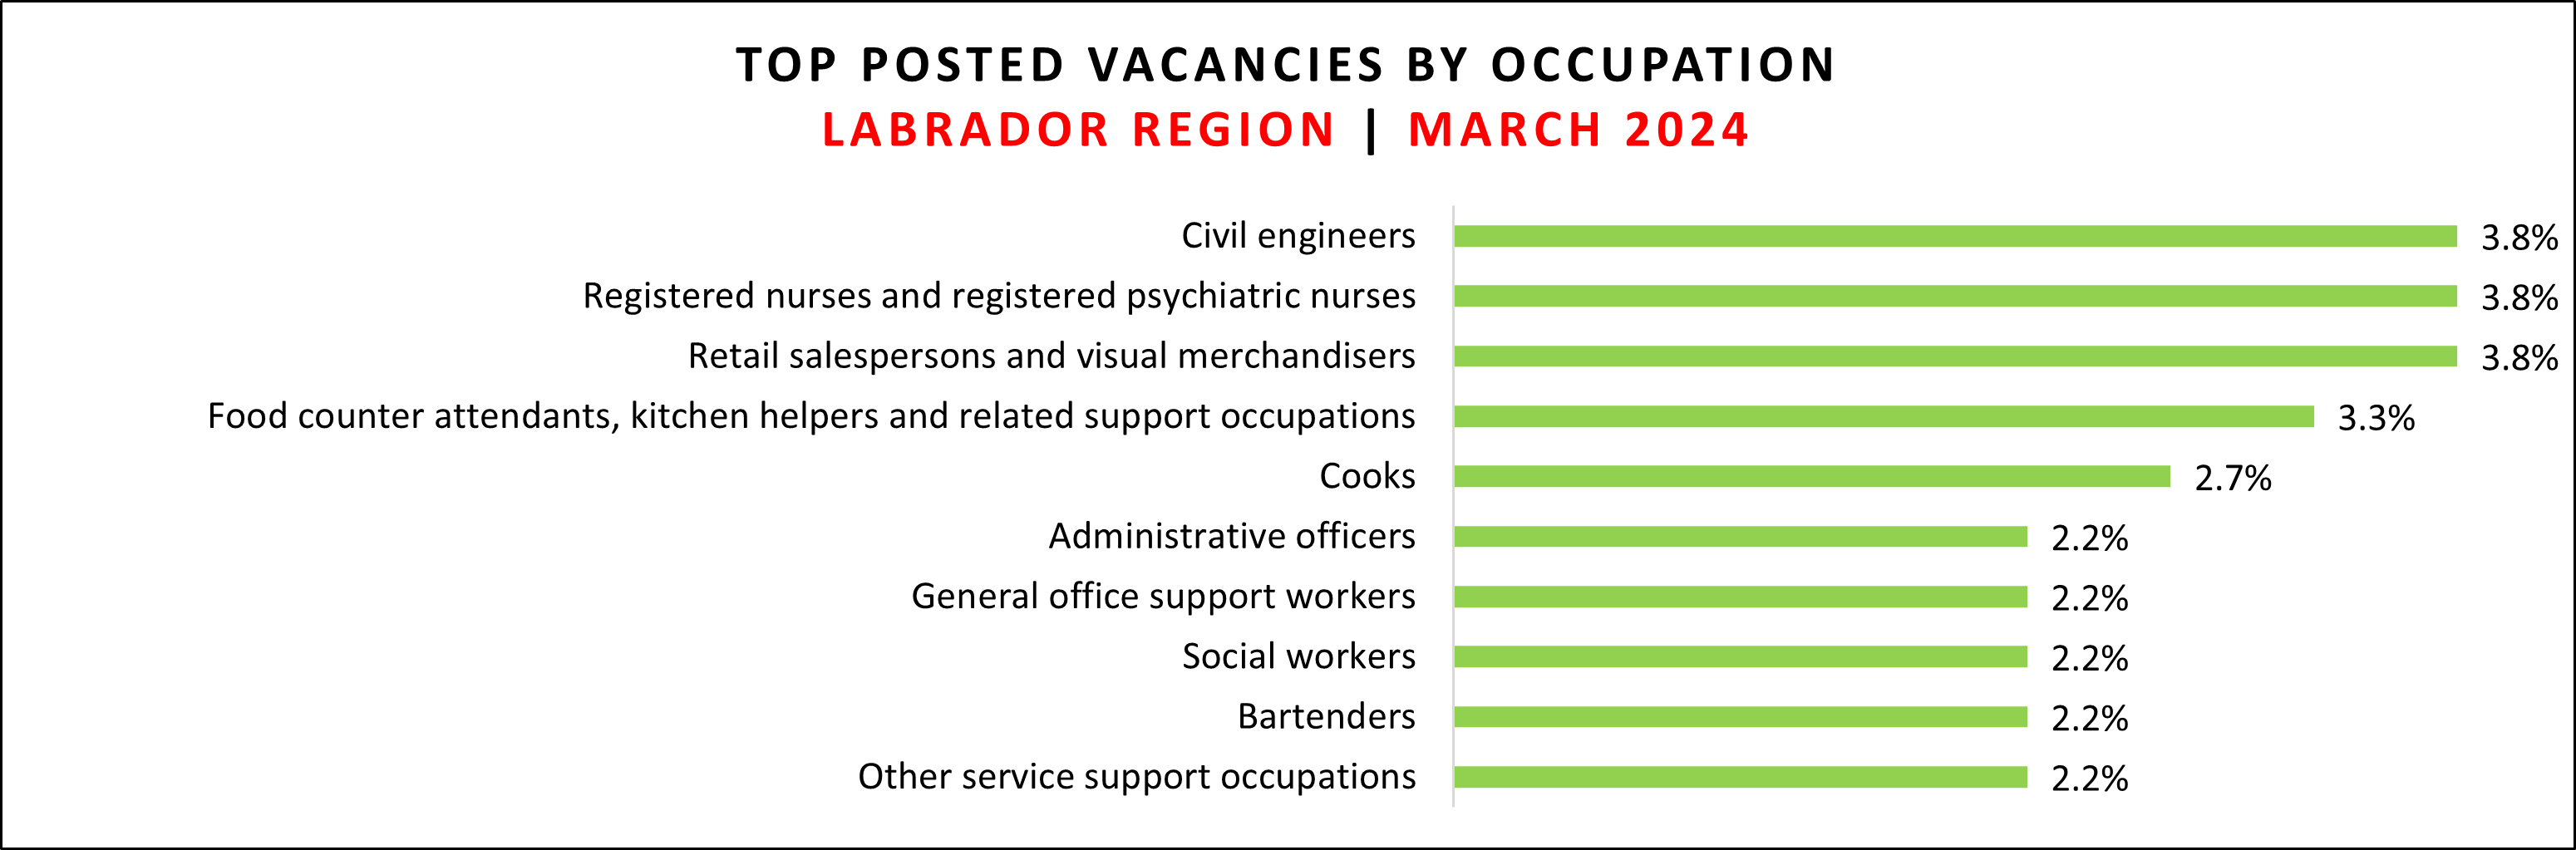 Jab vacancy data for Labrador region in March 2024.